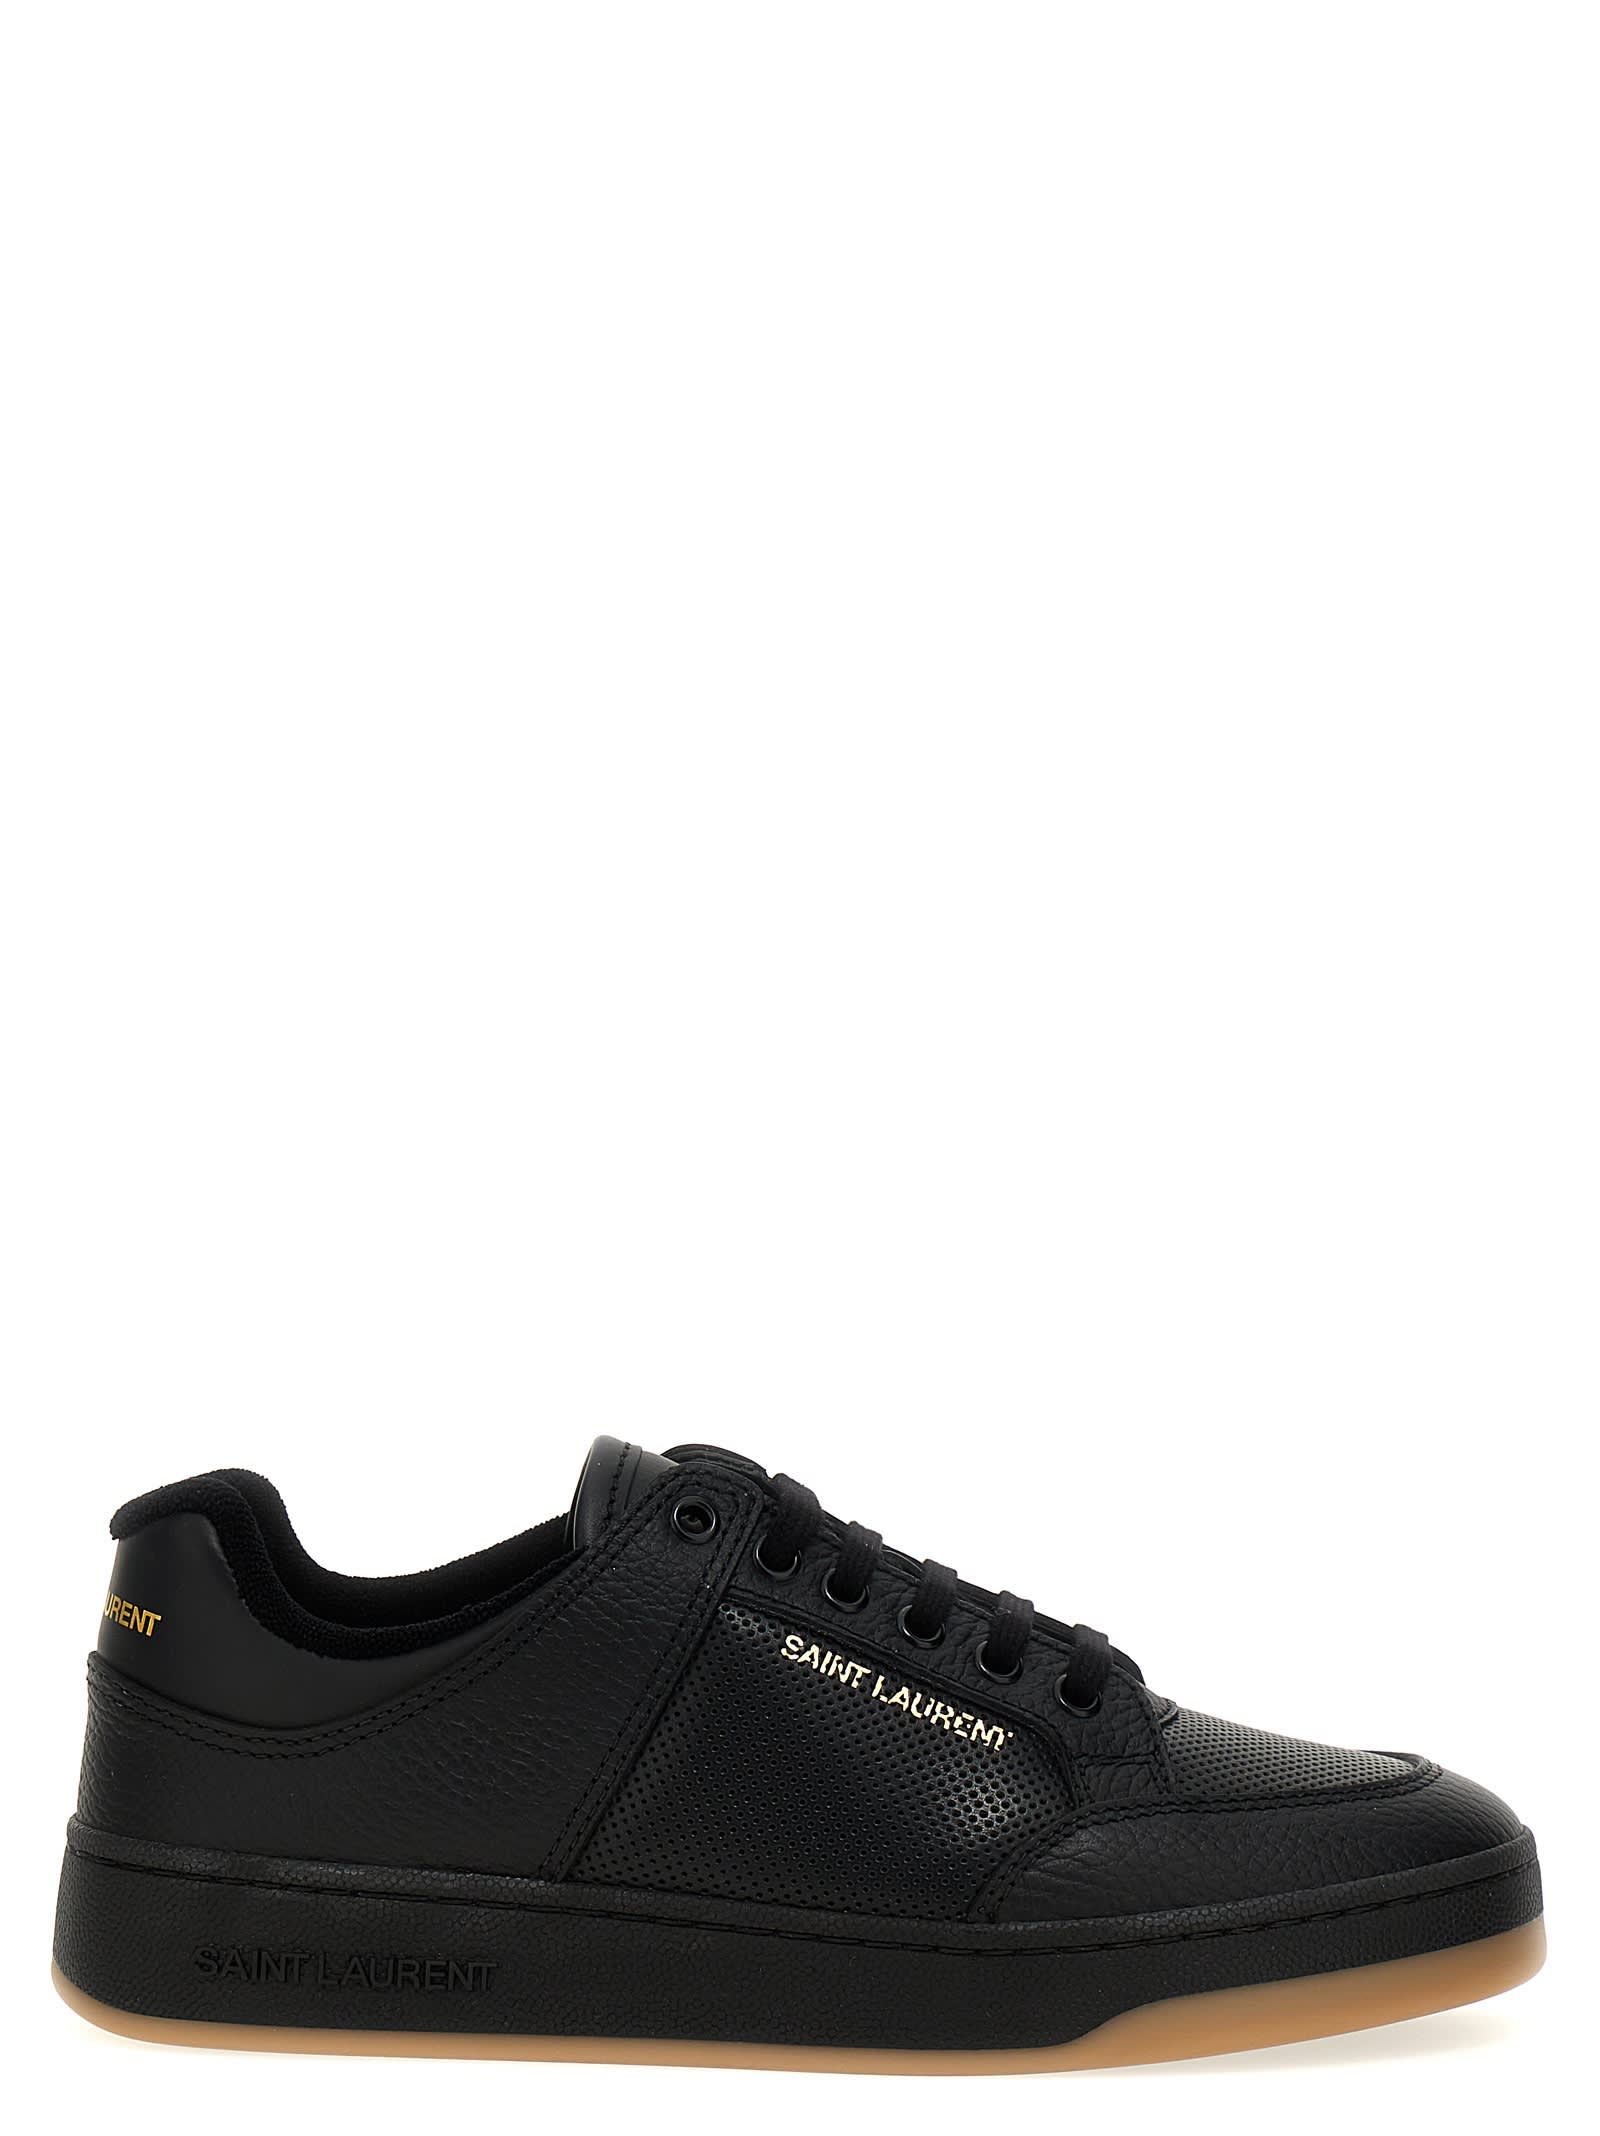 Saint Laurent Sl/61 Sneakers In Black